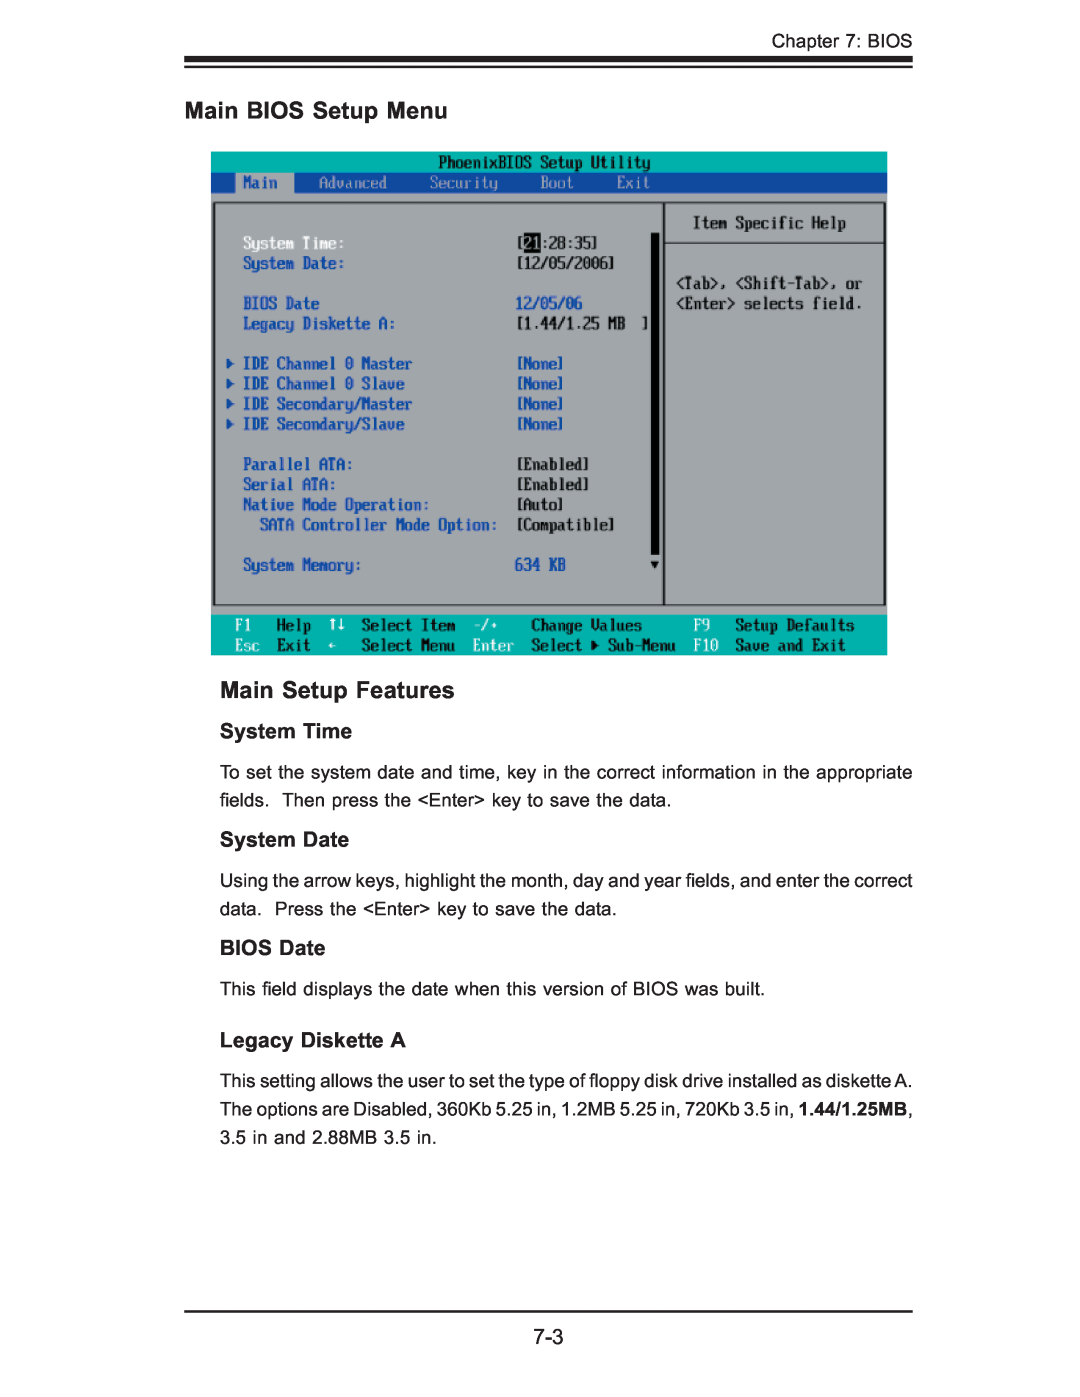 SUPER MICRO Computer 6025B-UR user manual Main BIOS Setup Menu Main Setup Features, System Time, System Date, BIOS Date 